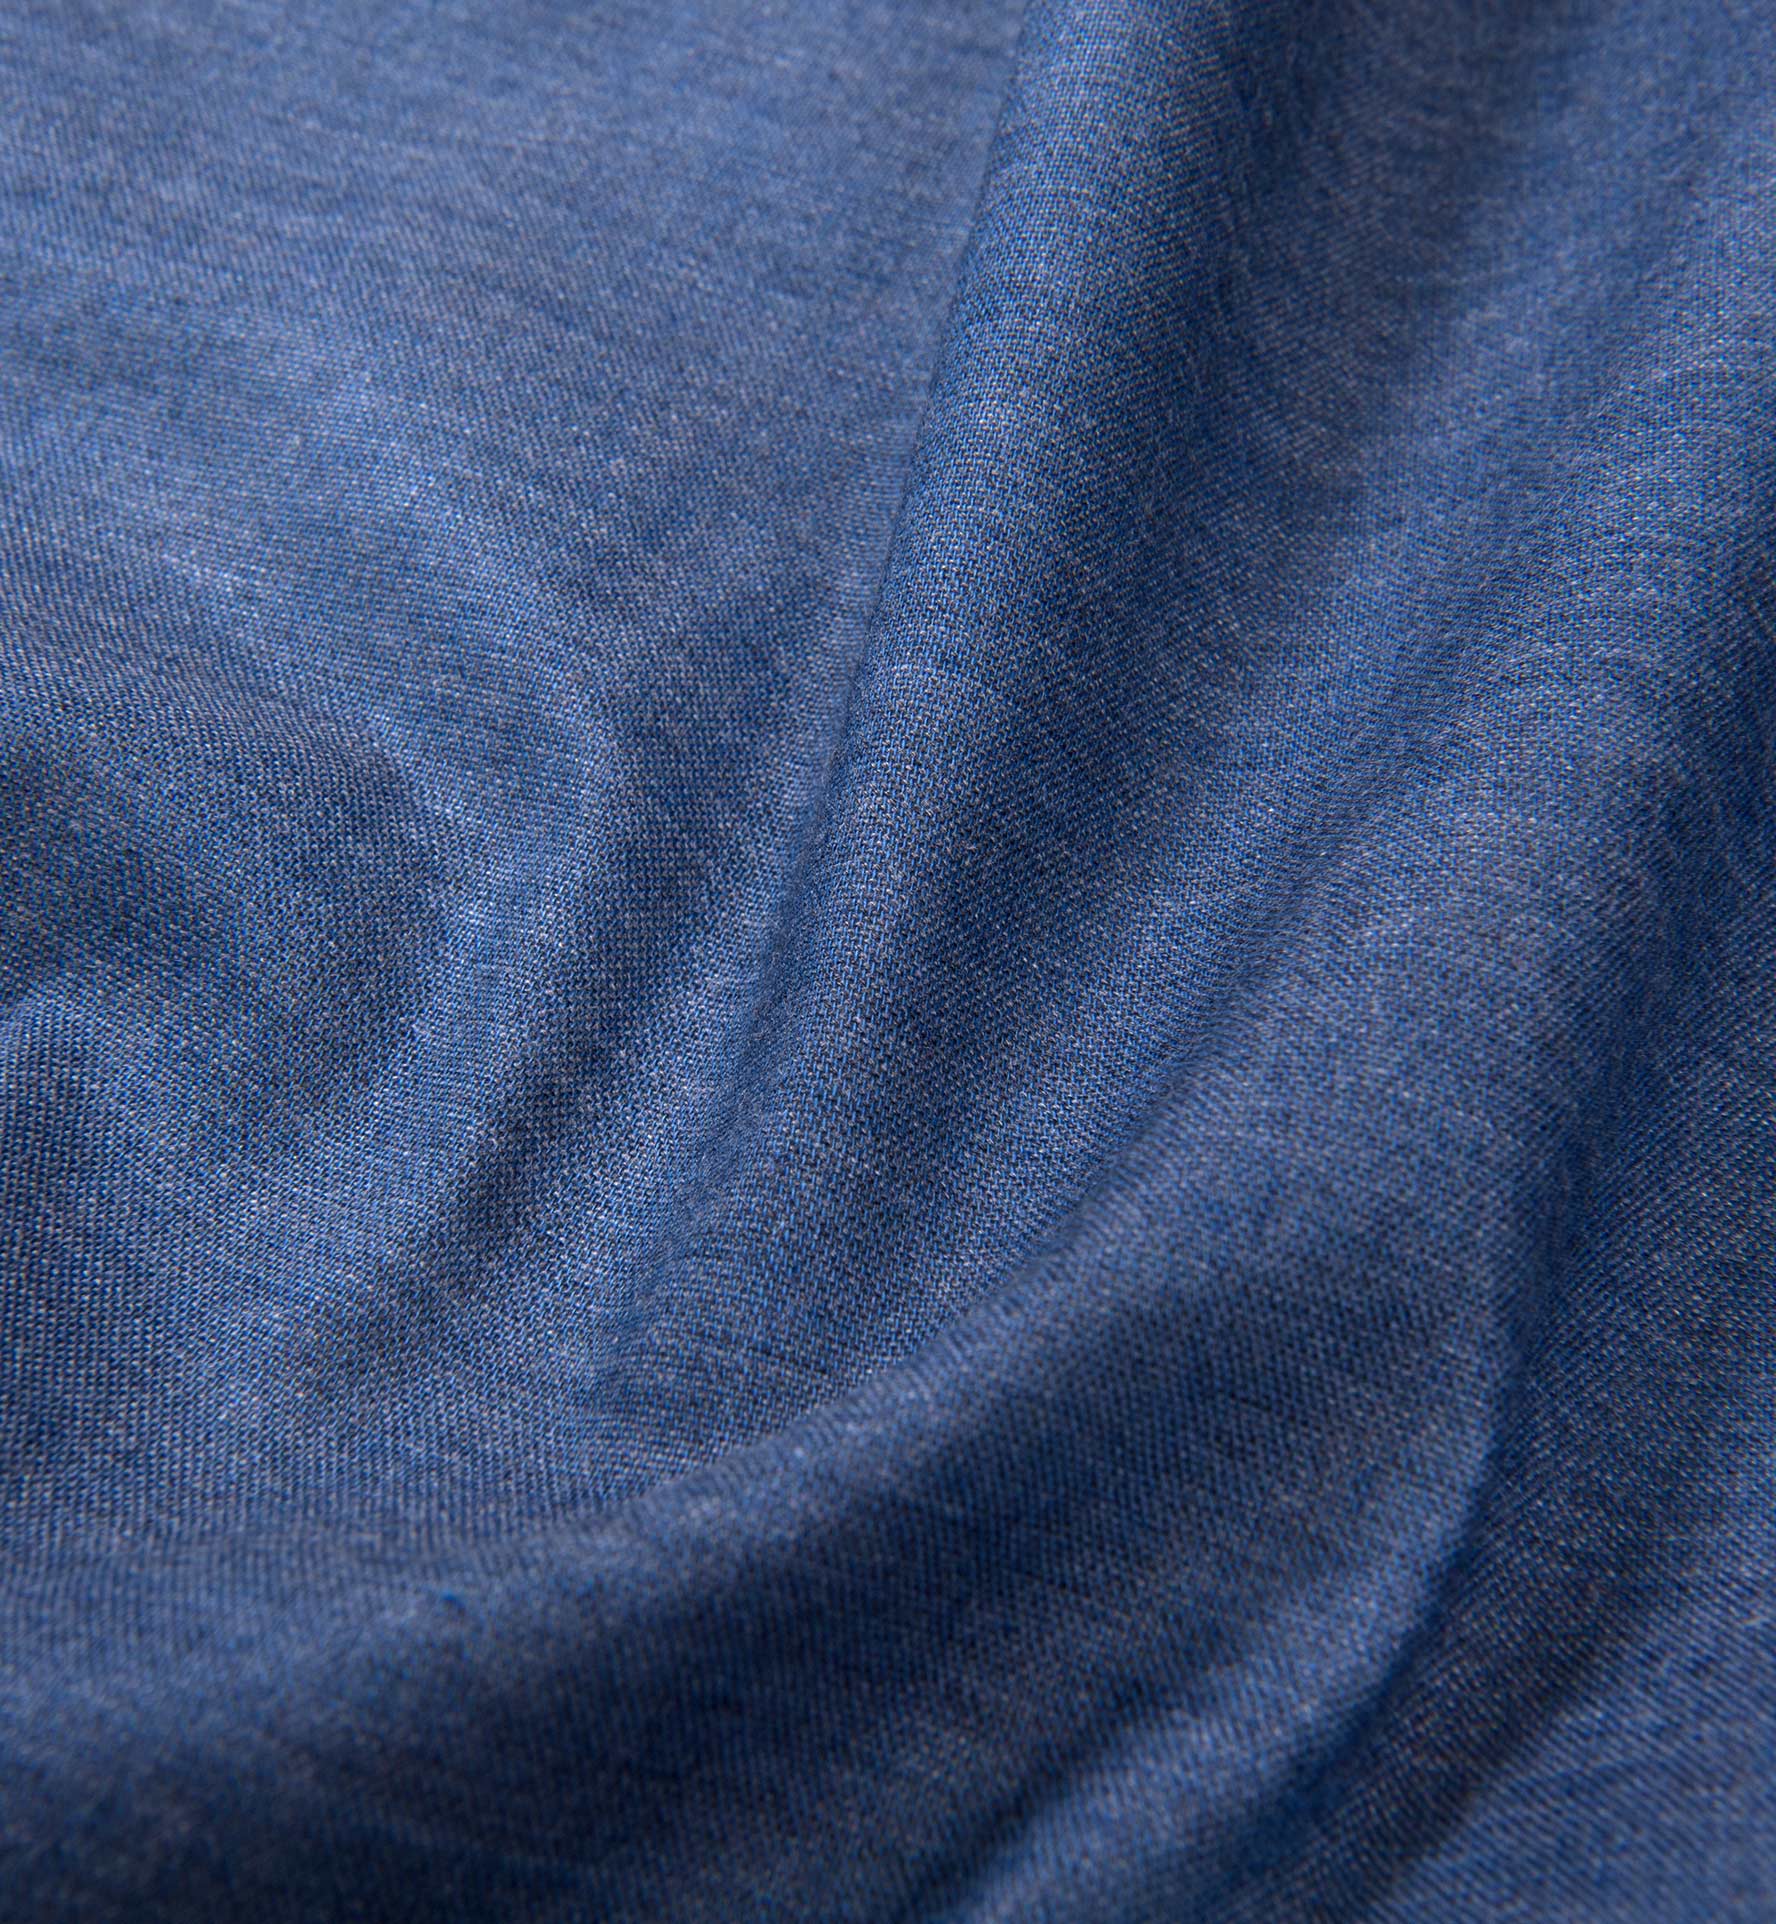 Japanese Slate Blue Chambray Shirts by Proper Cloth